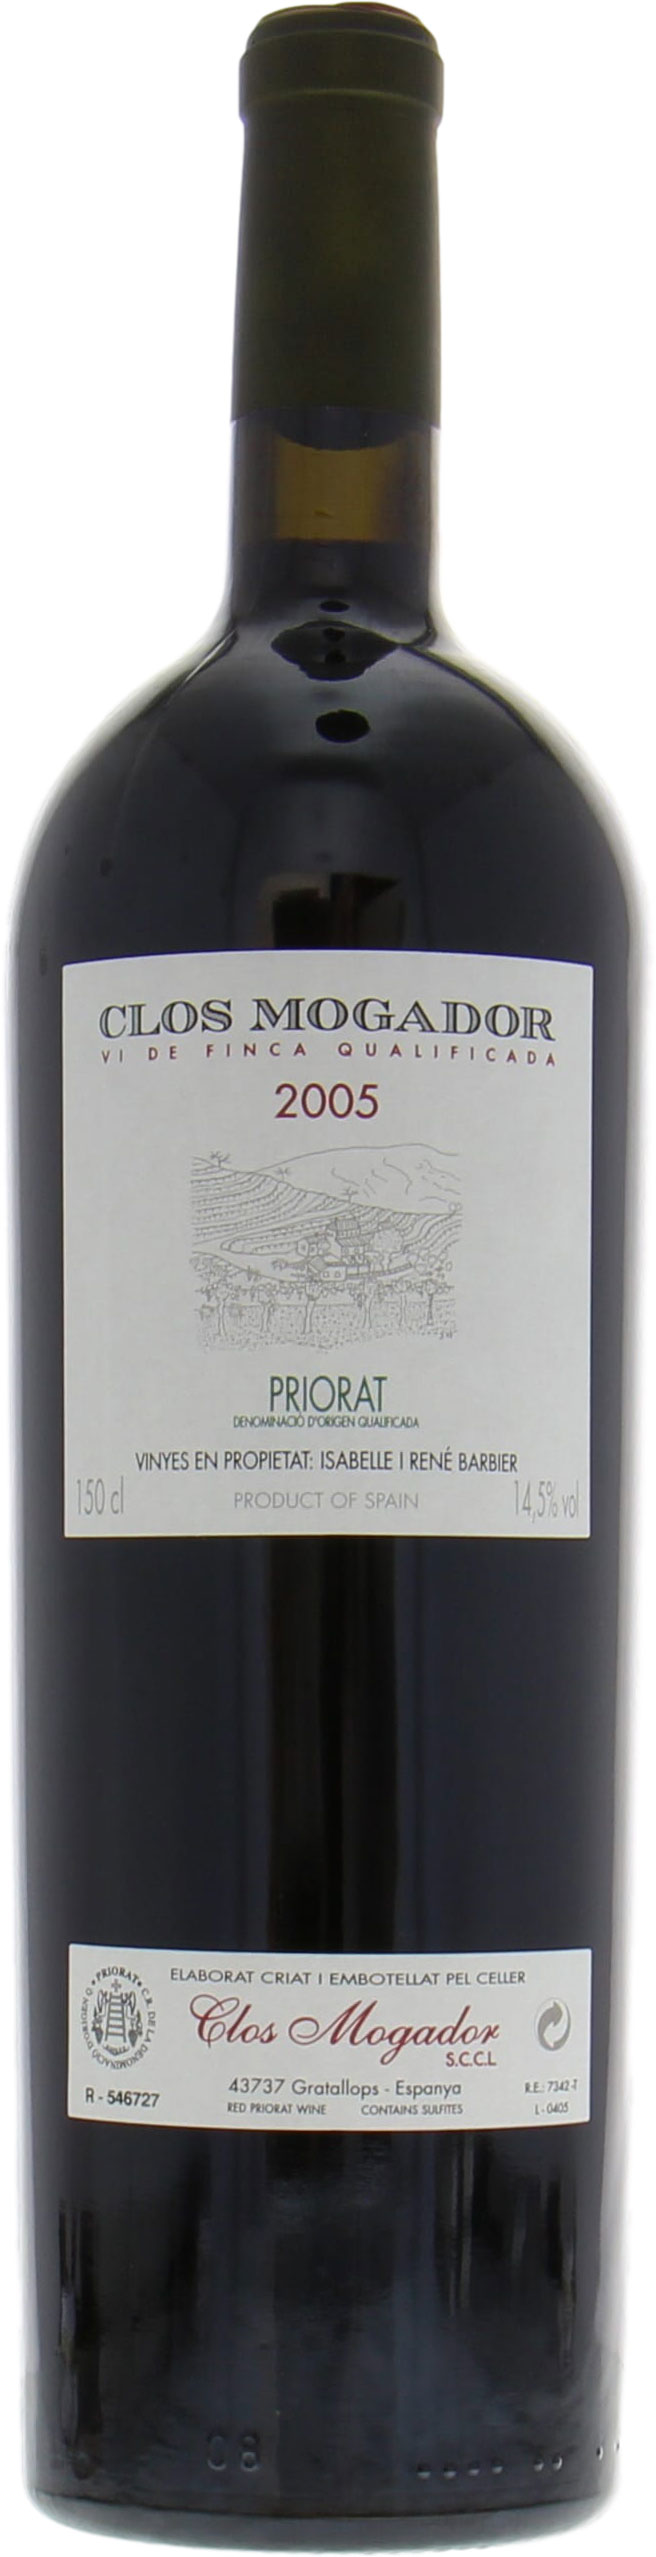 Clos Mogador - Priorat 2005